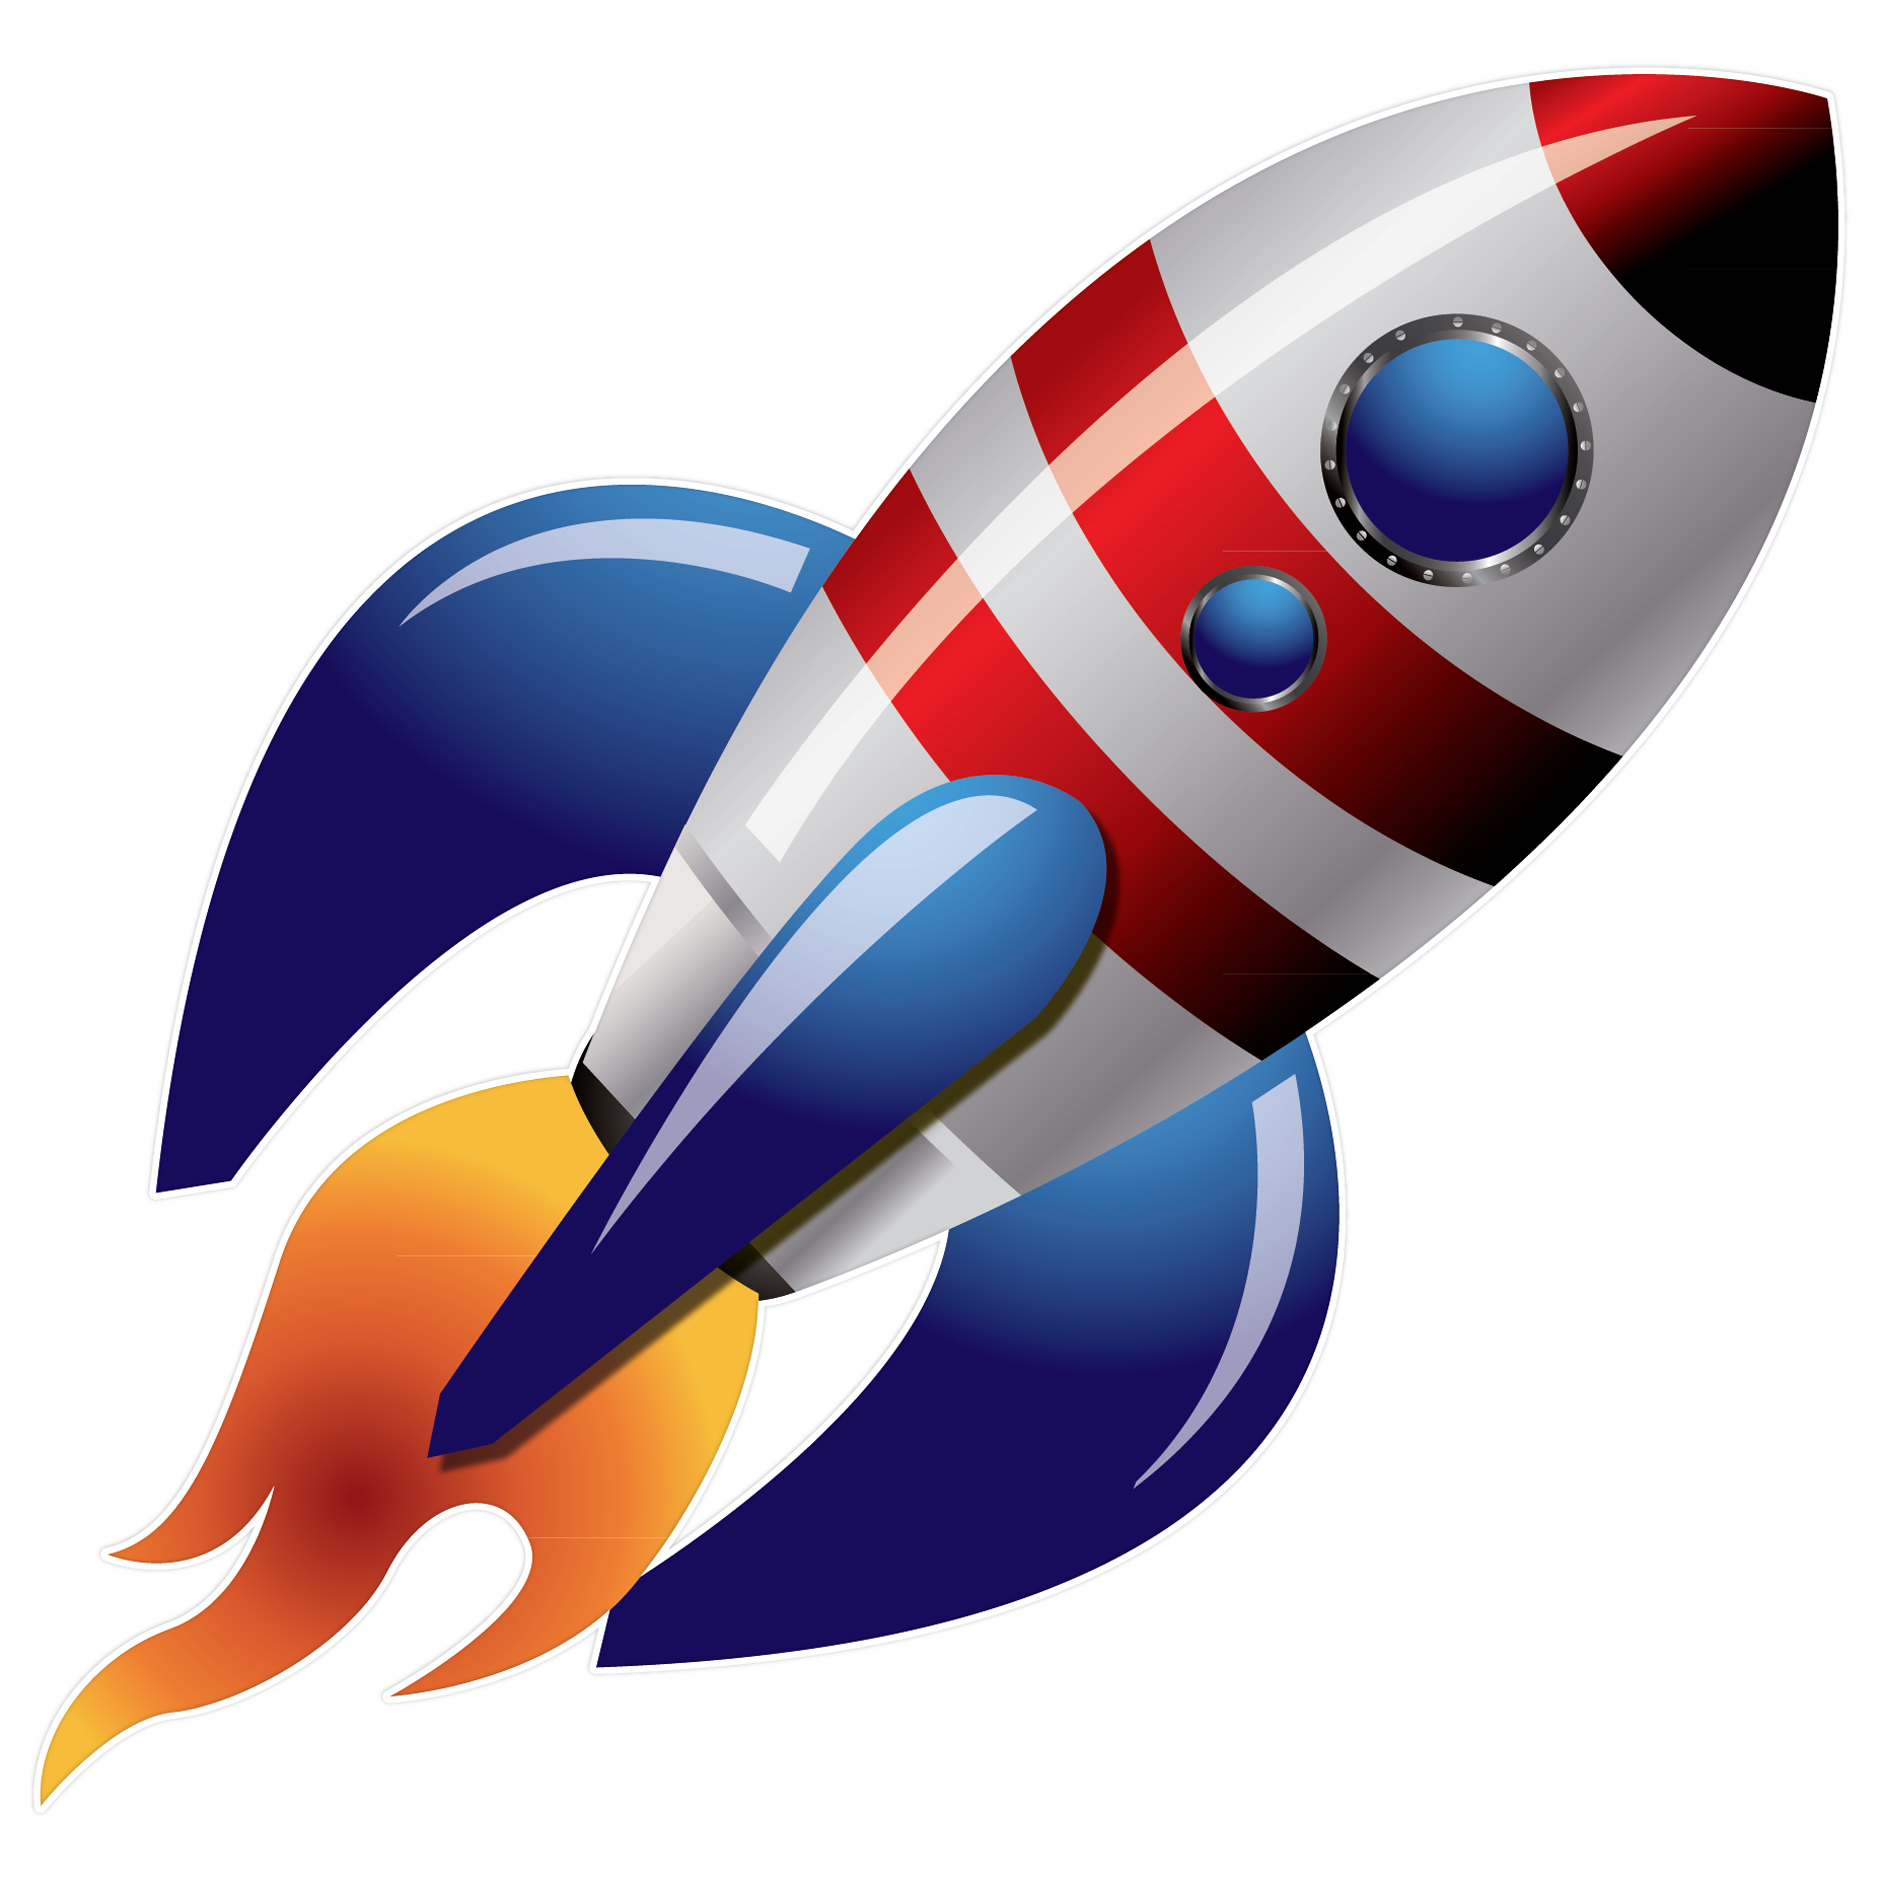 Rocketship clipart realistic, Rocketship realistic Transparent FREE for